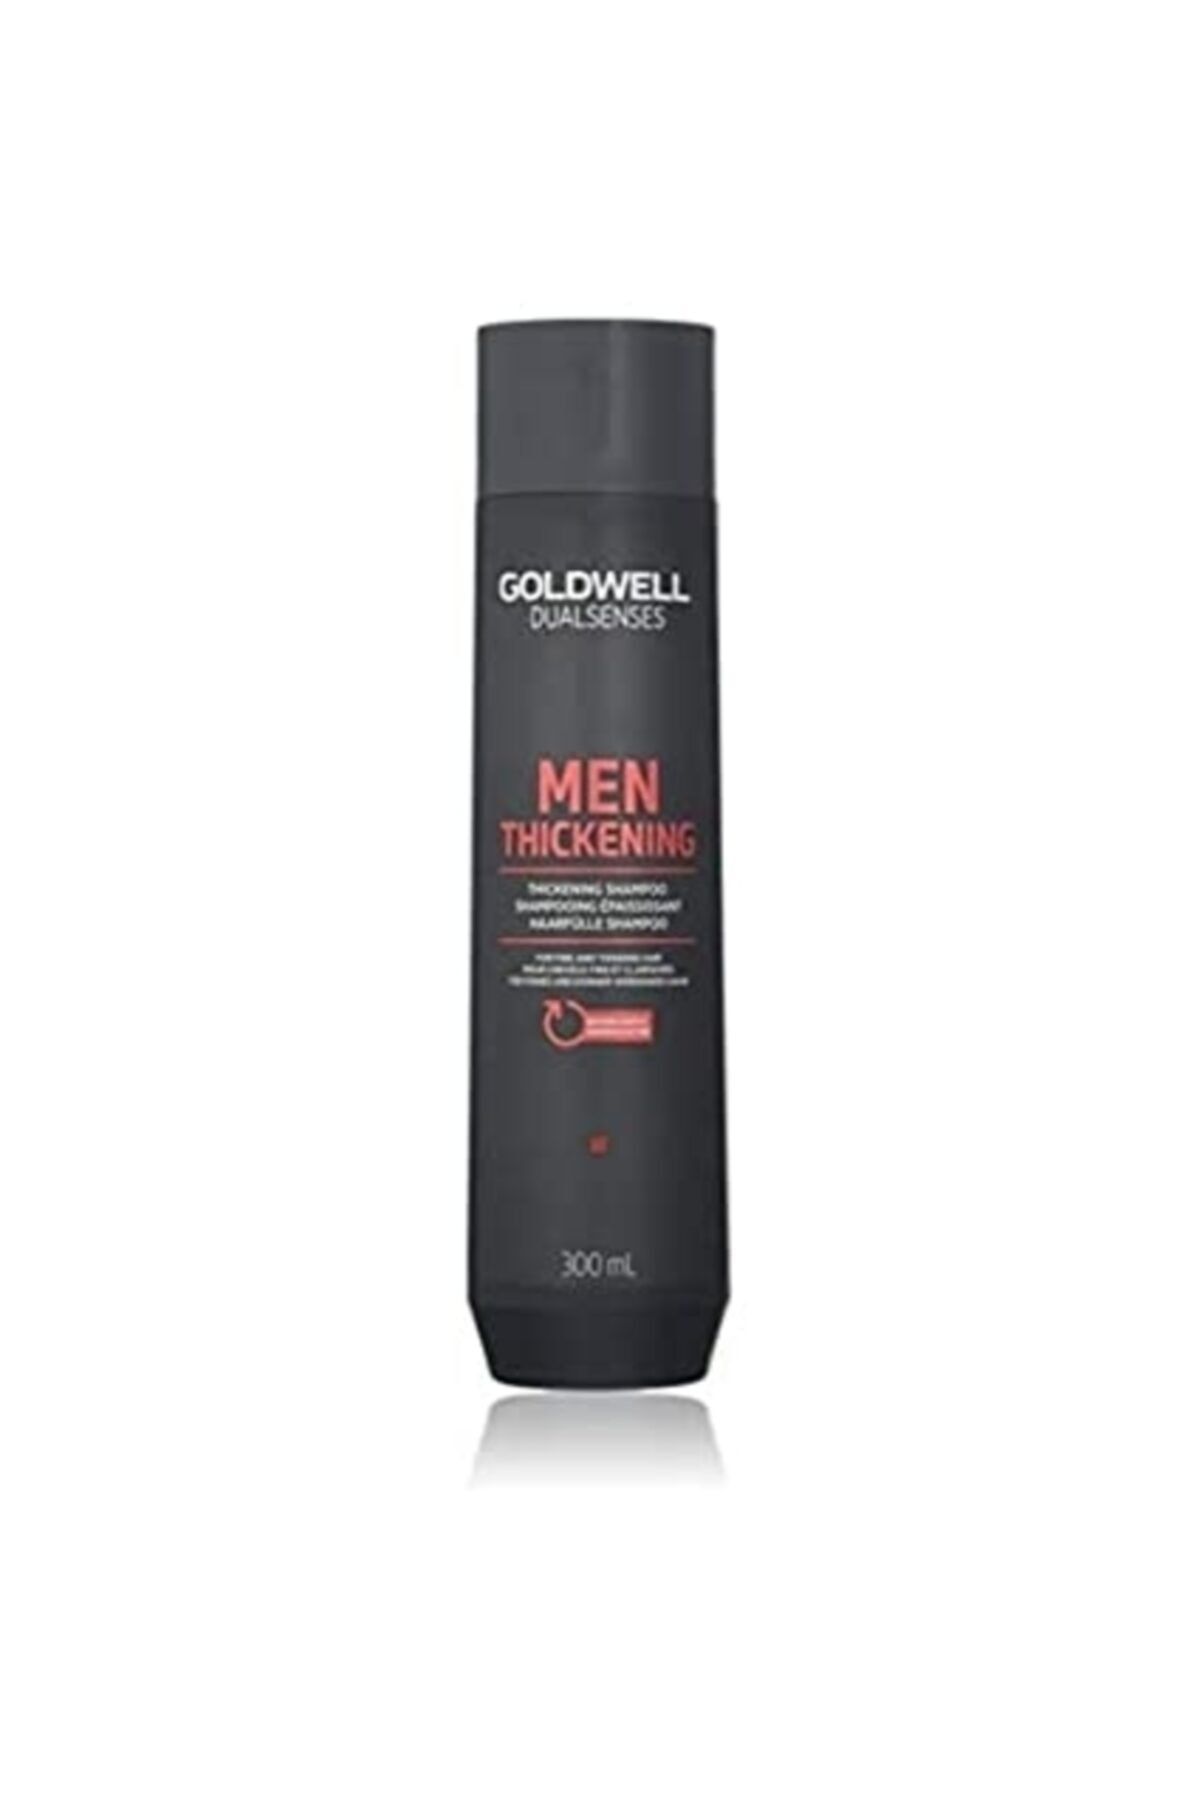 GOLDWELL Men Thickening Dökülme Karşıtı Şampuan 300ml 4021609025795